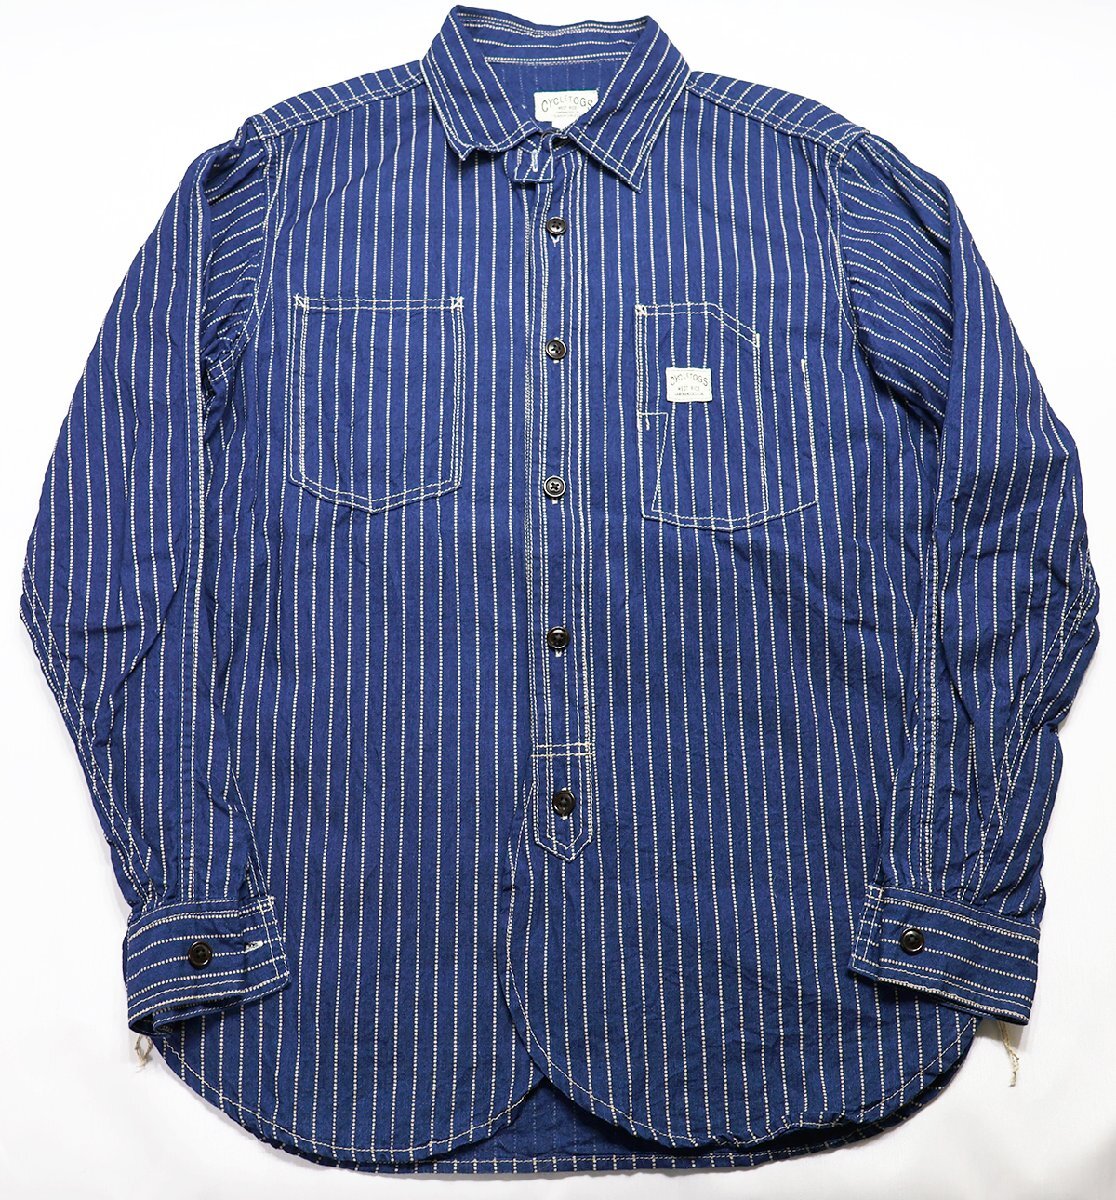 WESTRIDE (ウエストライド) PCH SHIRT - NAVY WABASH / ウォバッシュ ワークシャツ 美品 ネイビー size 40(L)の画像1